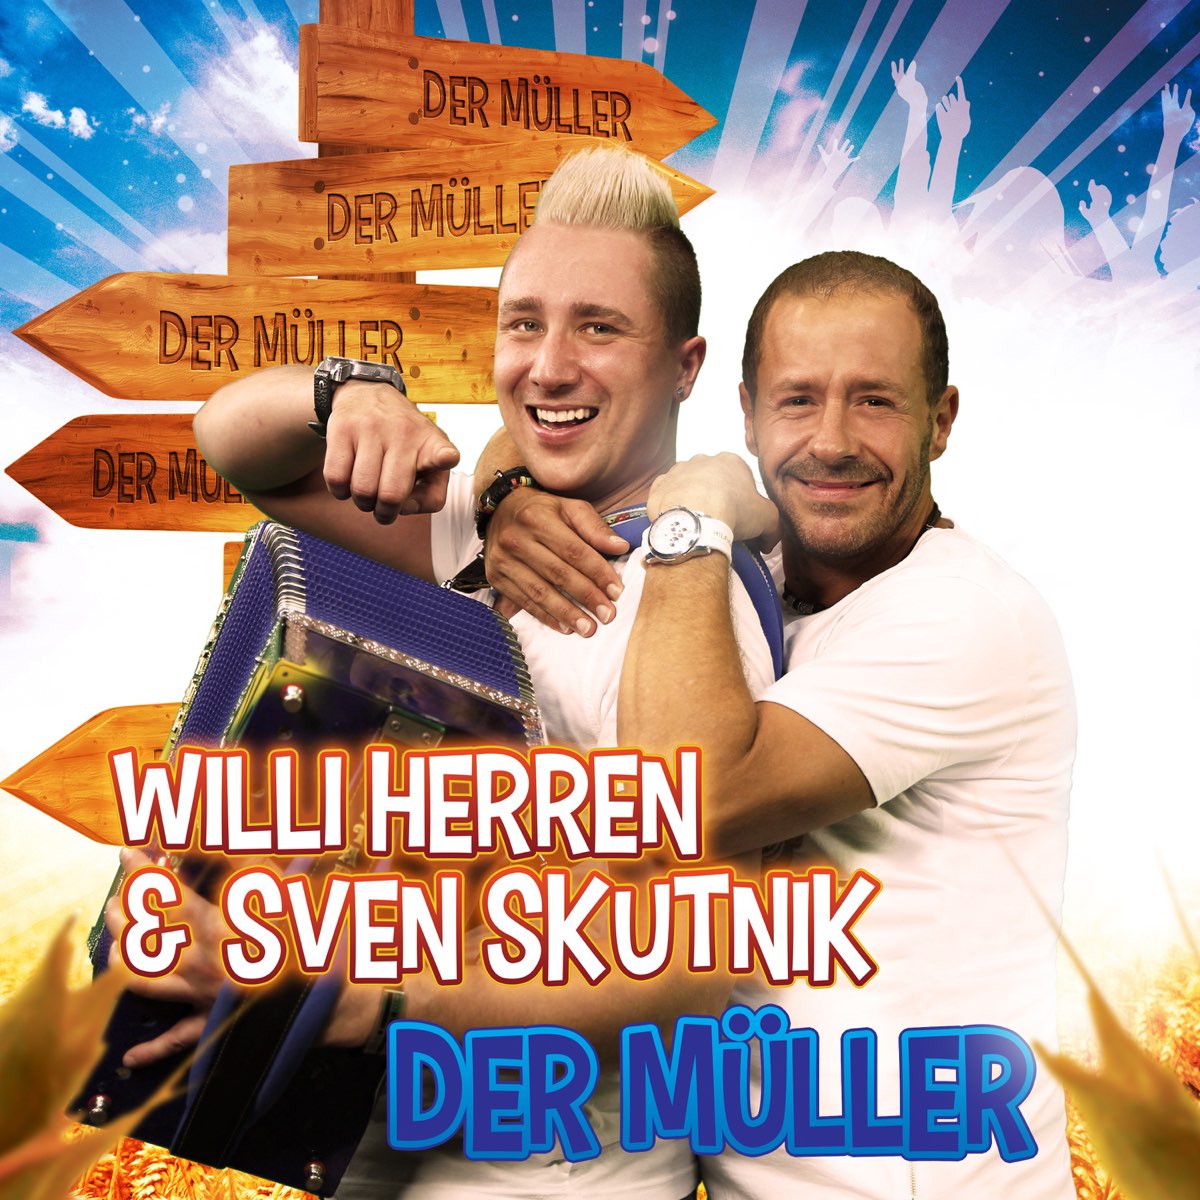 Der Müller - Single by Willi Herren & Sven Skutnik on Apple Music